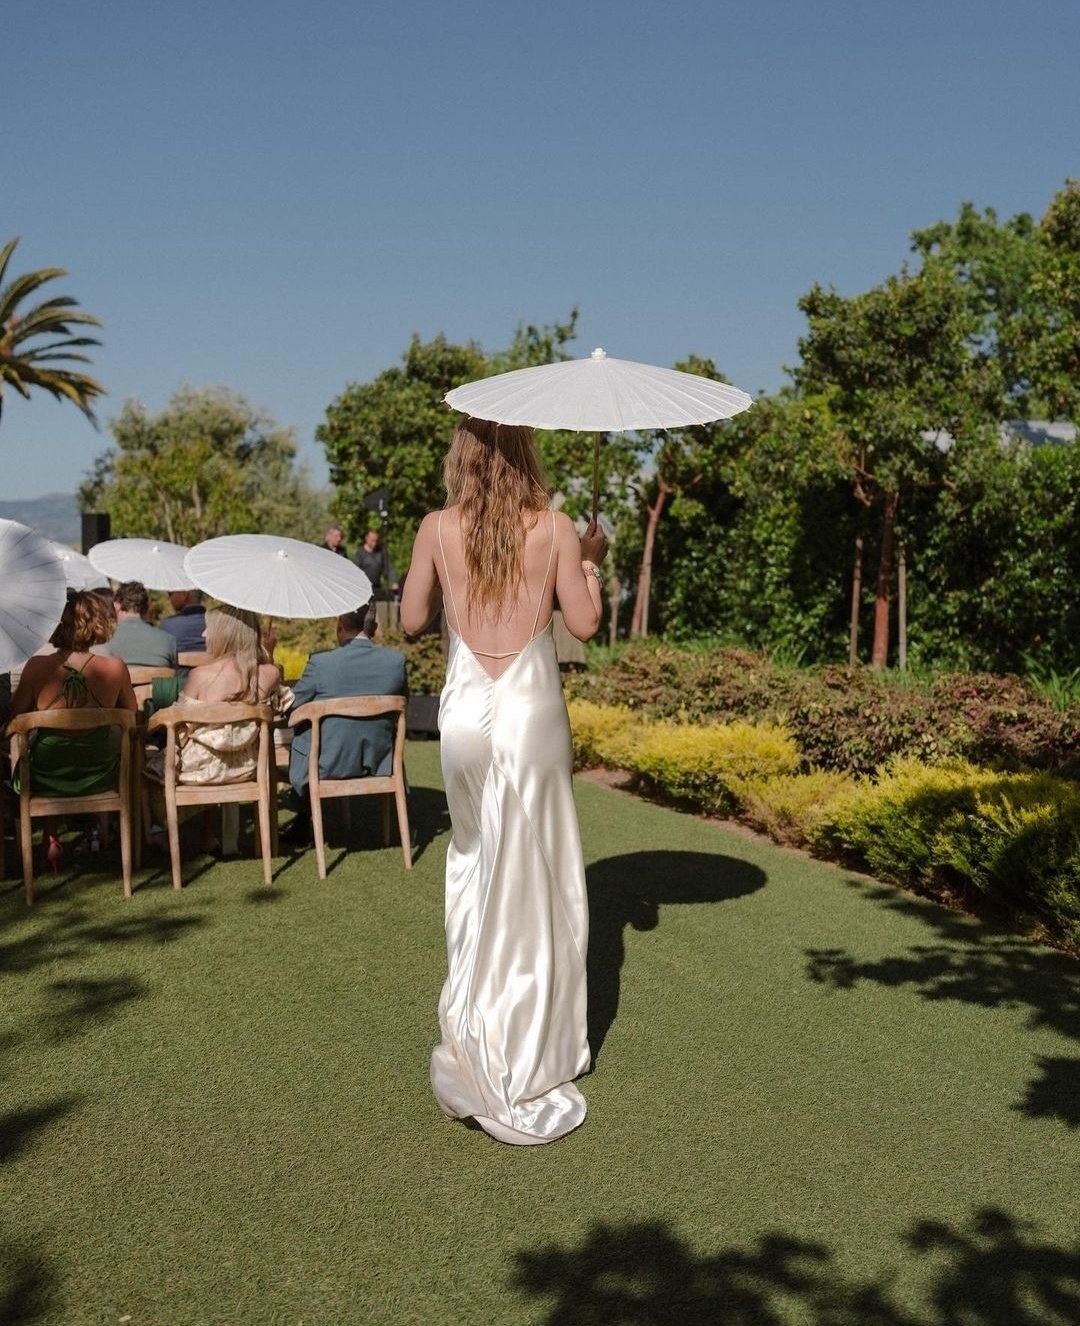 olivia in the wedding dress holding a sun umbrella